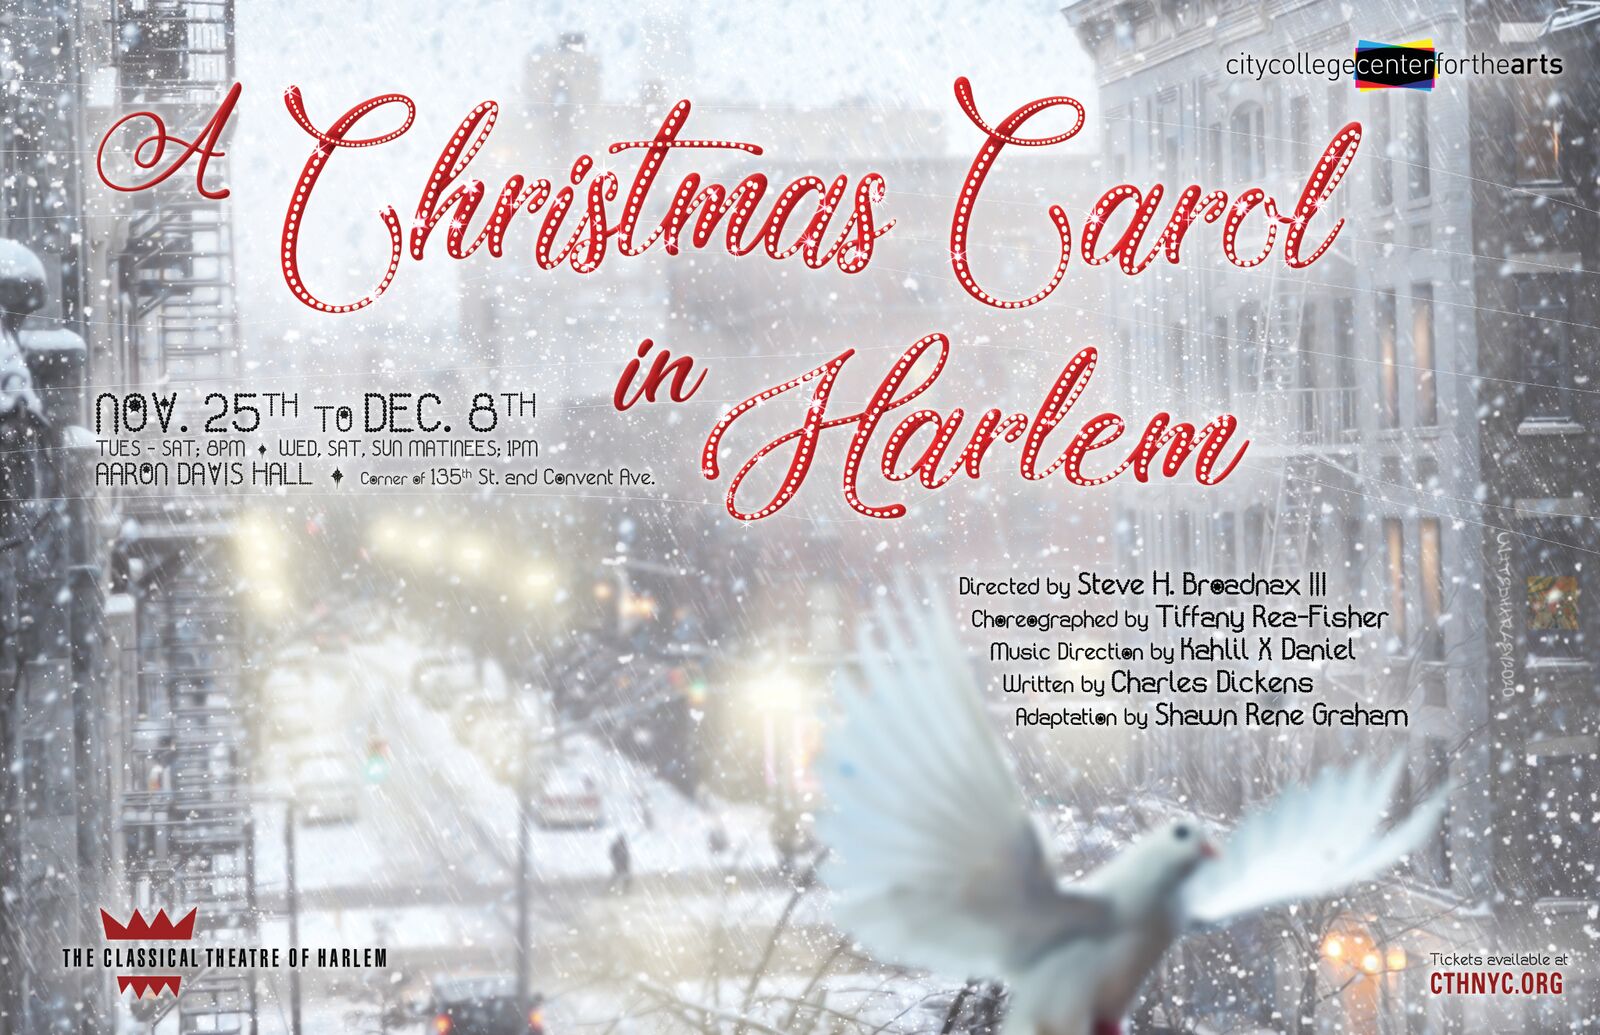 A Christmas Carol in Harlem Performance